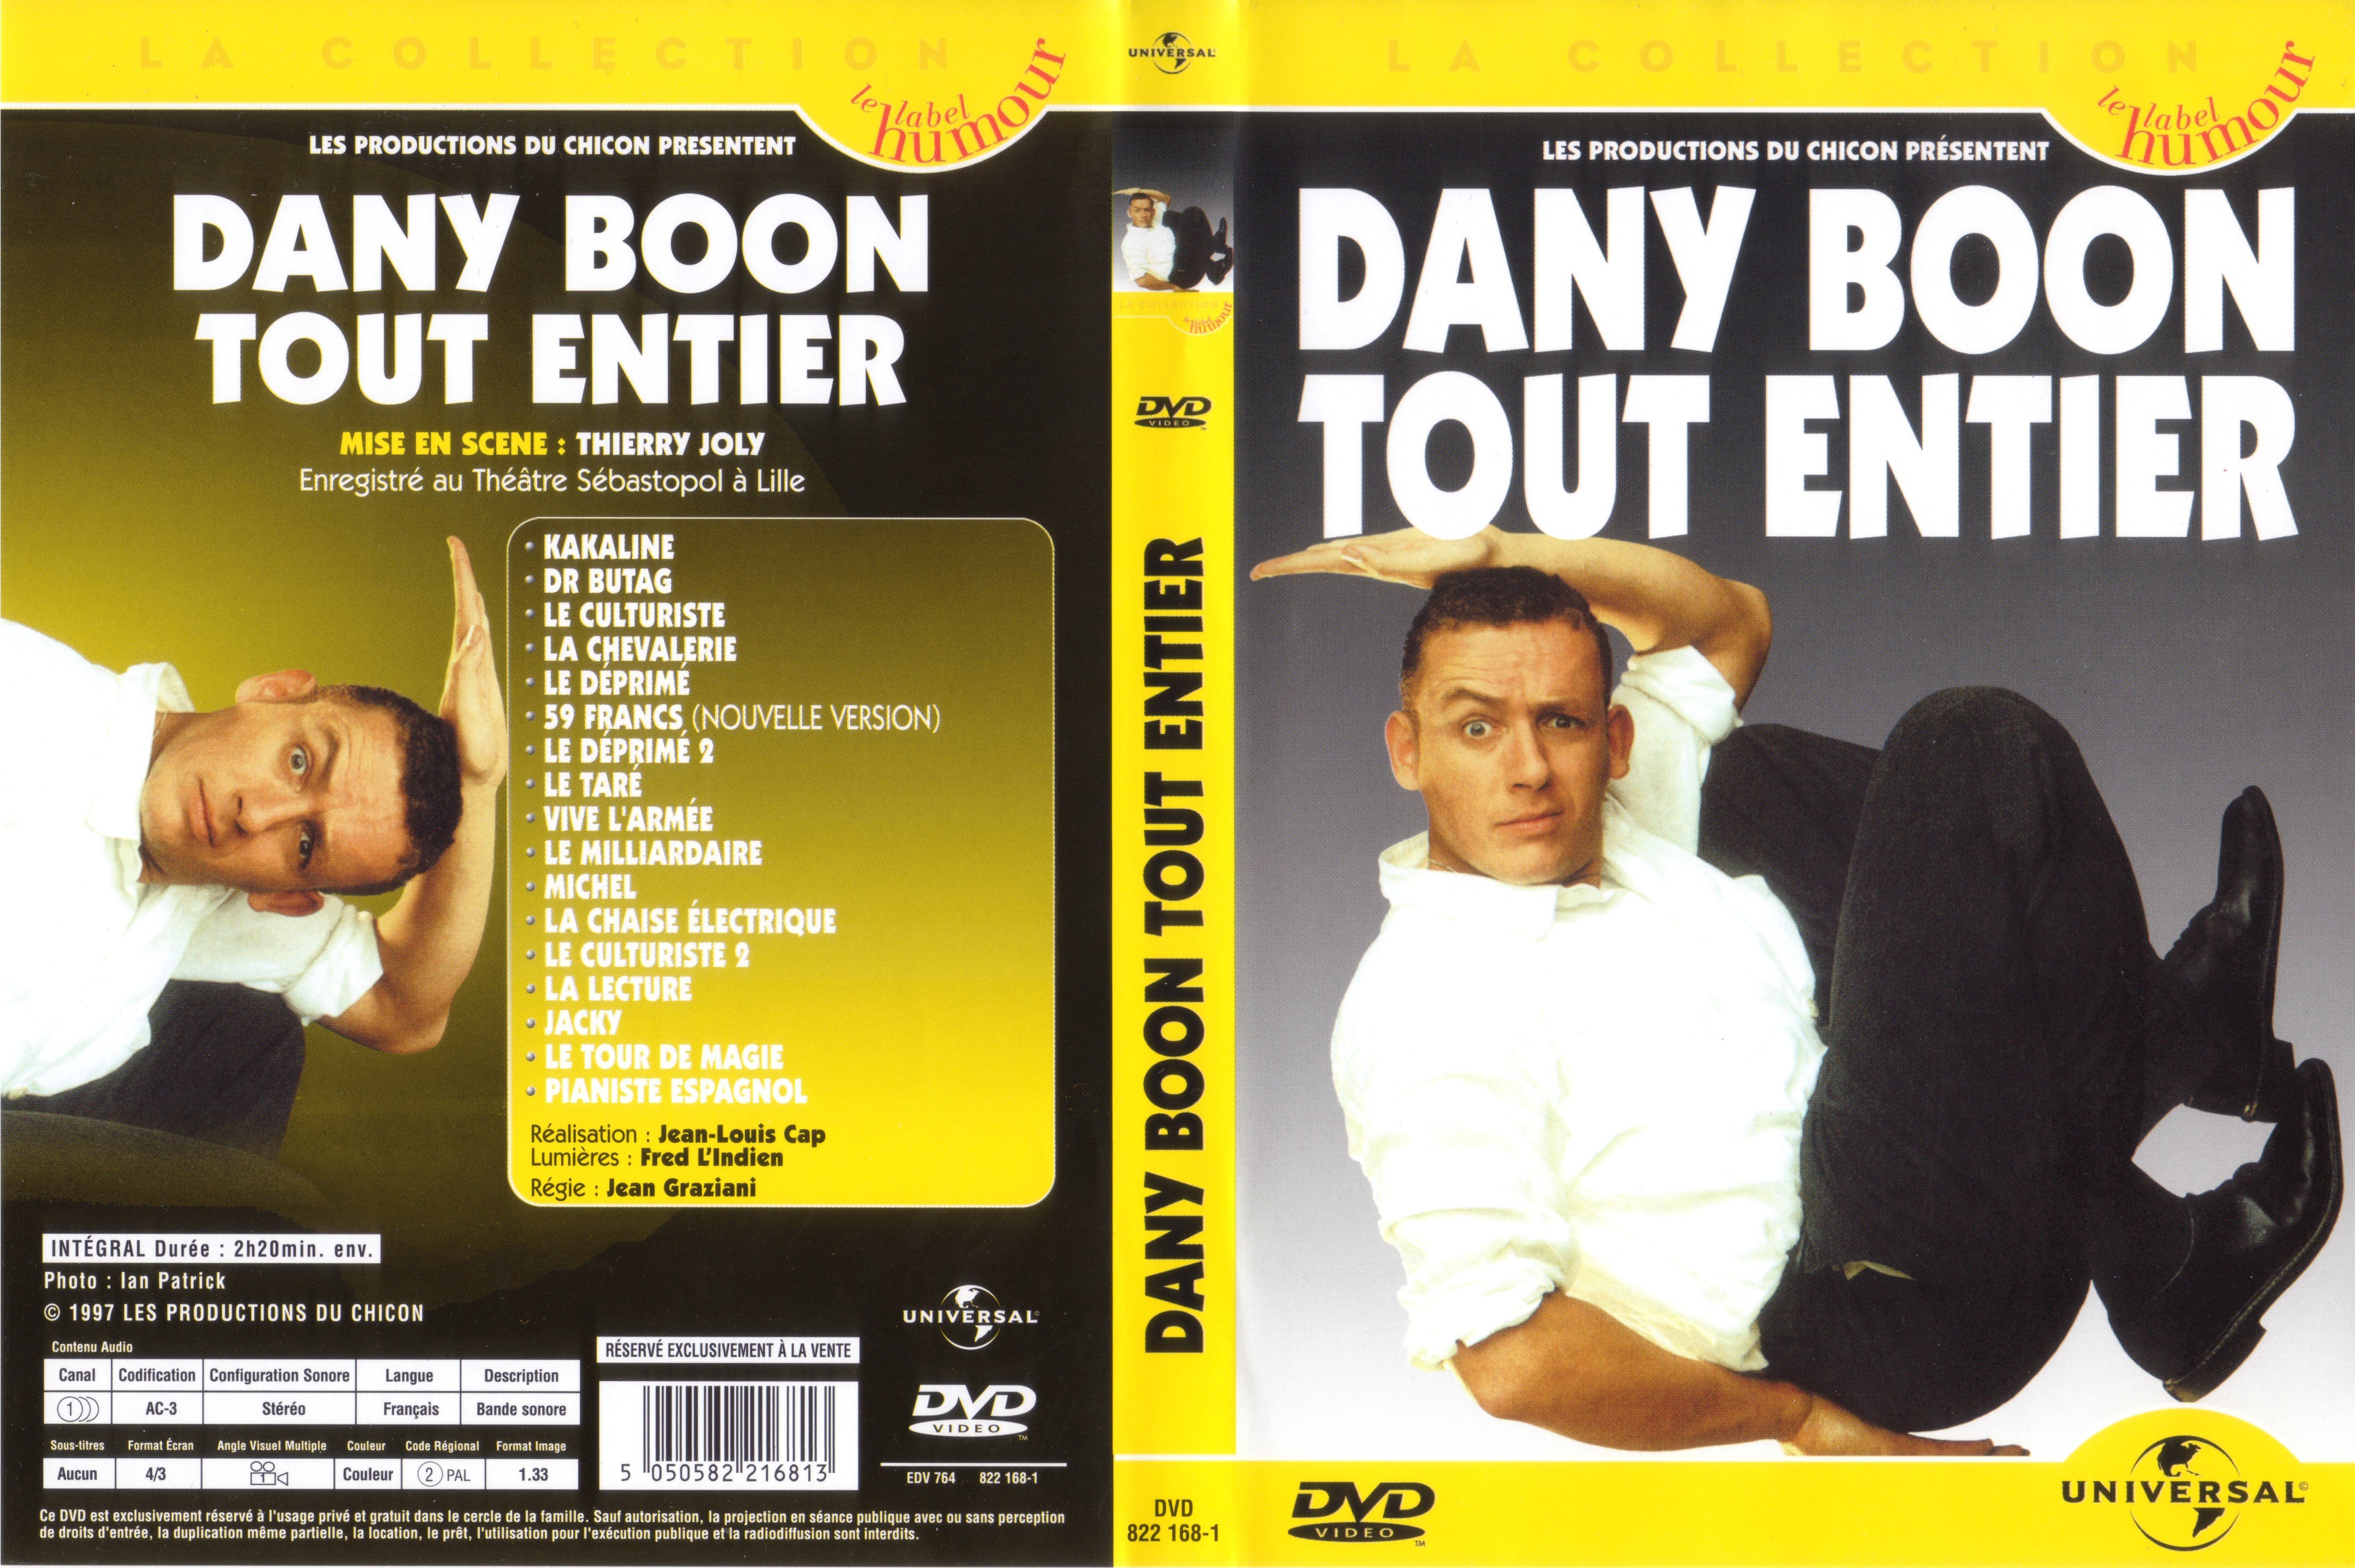 Jaquette DVD Dany Boon tout entier